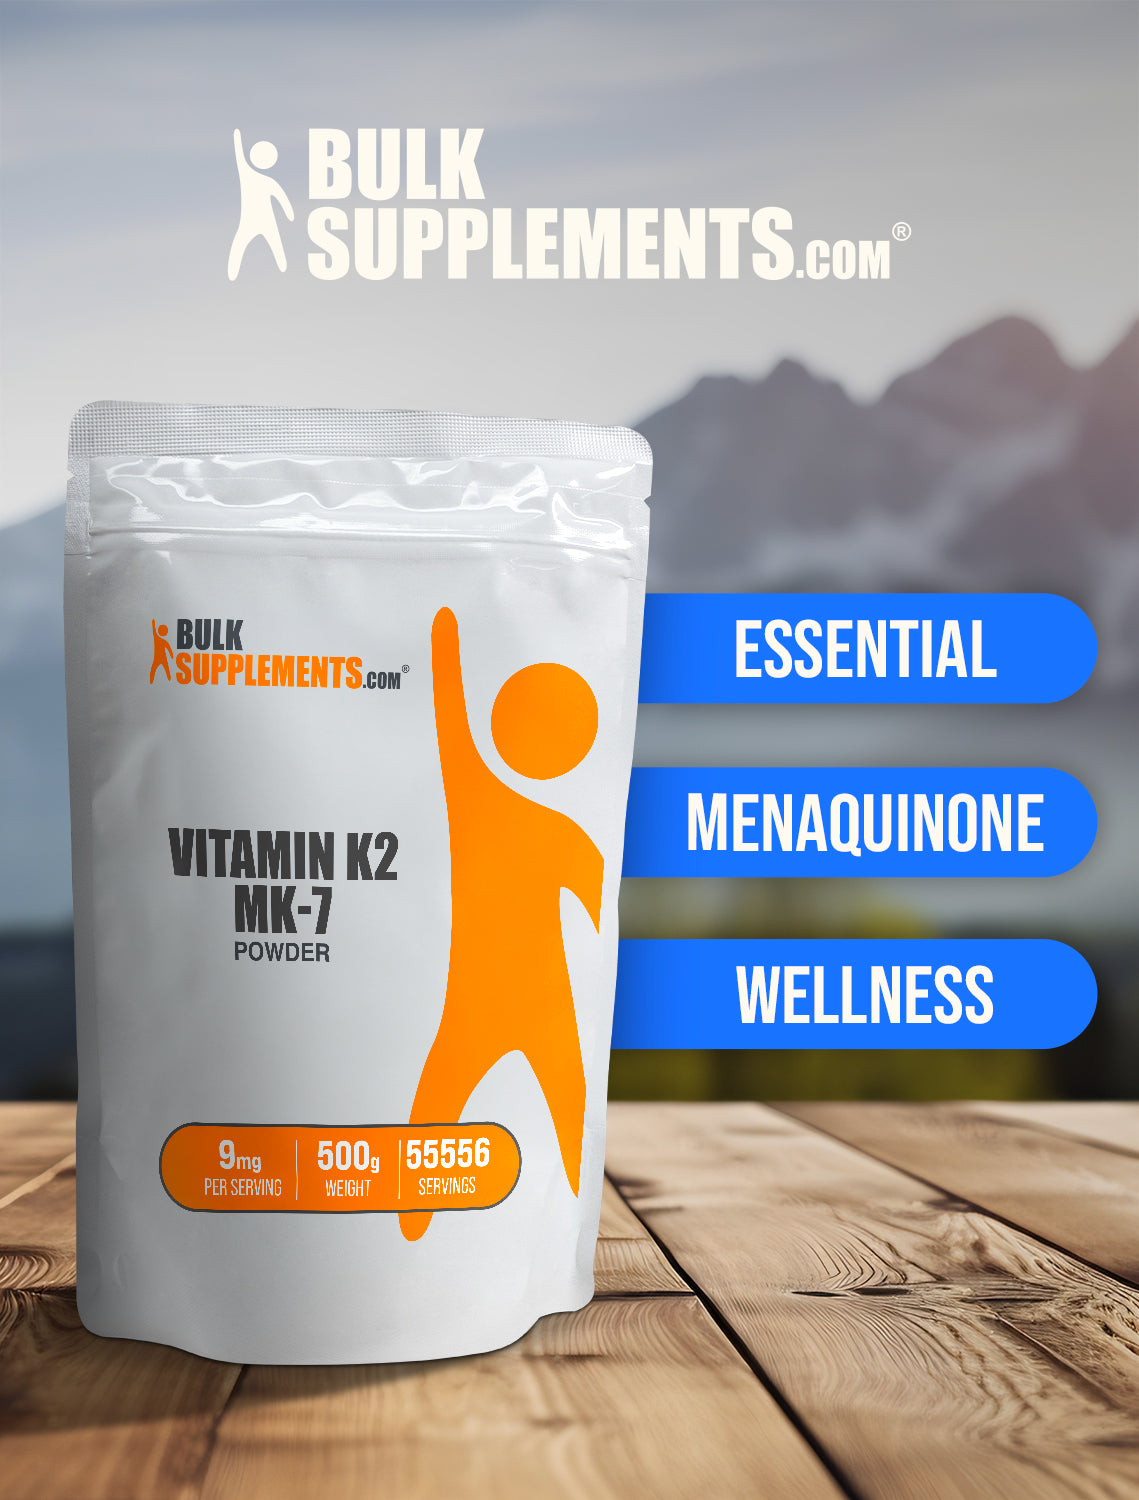 Vitamin K2 MK-7 powder keyword image 500g